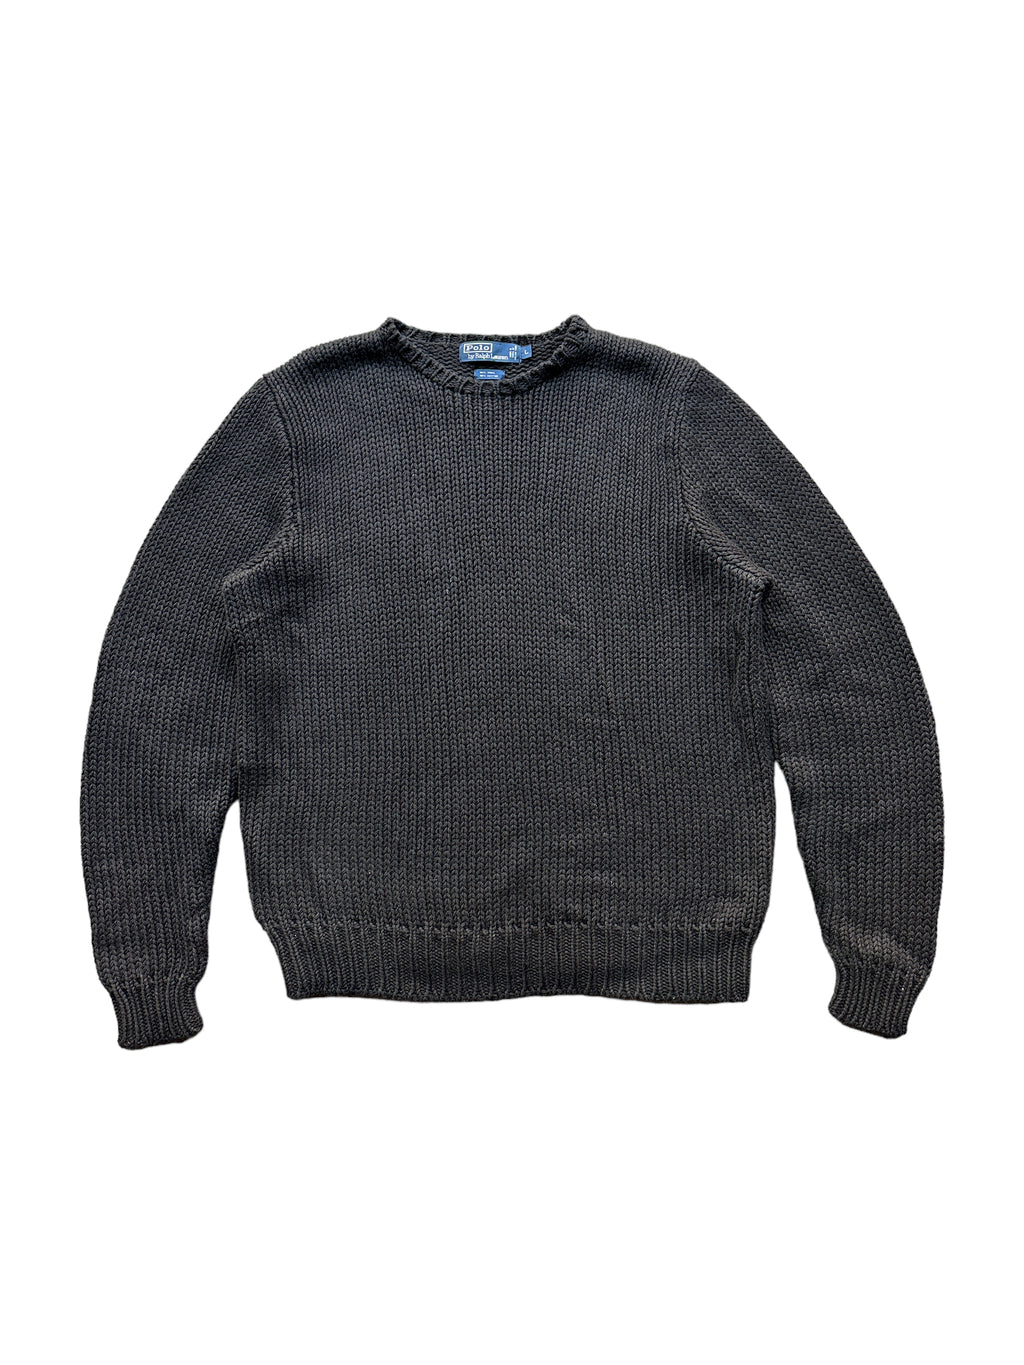 Polo ralph lauren cotton wool blend sweater large